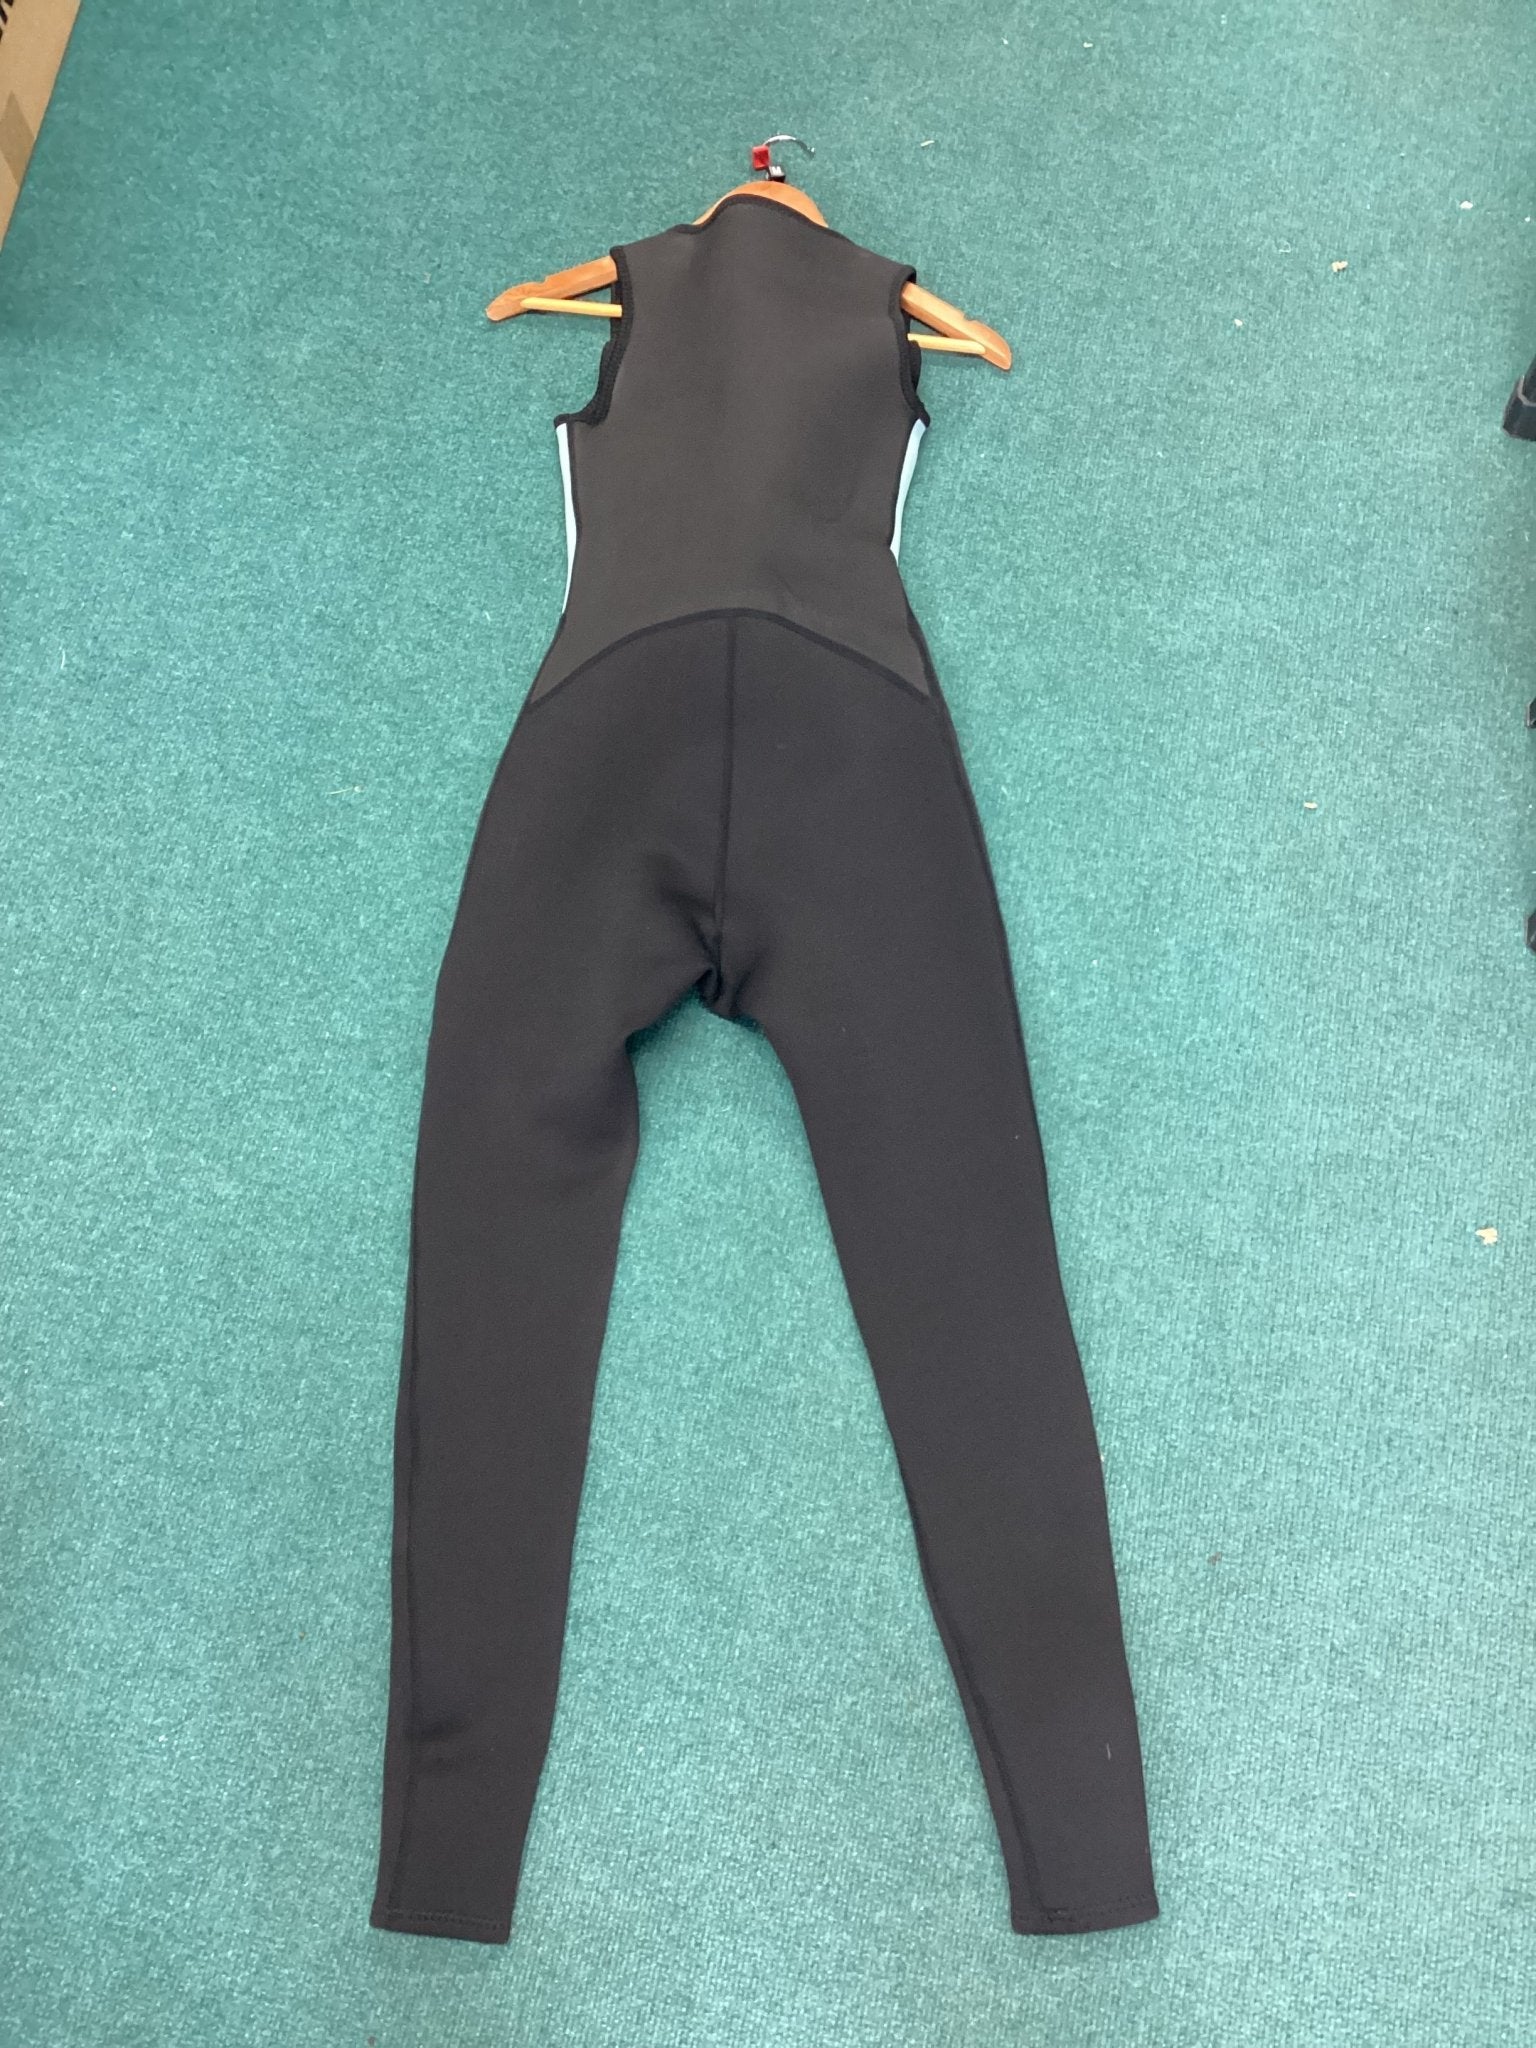 Typhoon Women’s XTS Pulse sleeveless wetsuit size medium Long Jane - Worthing Watersports - 5055610523703 - Wetsuits - Typhoon